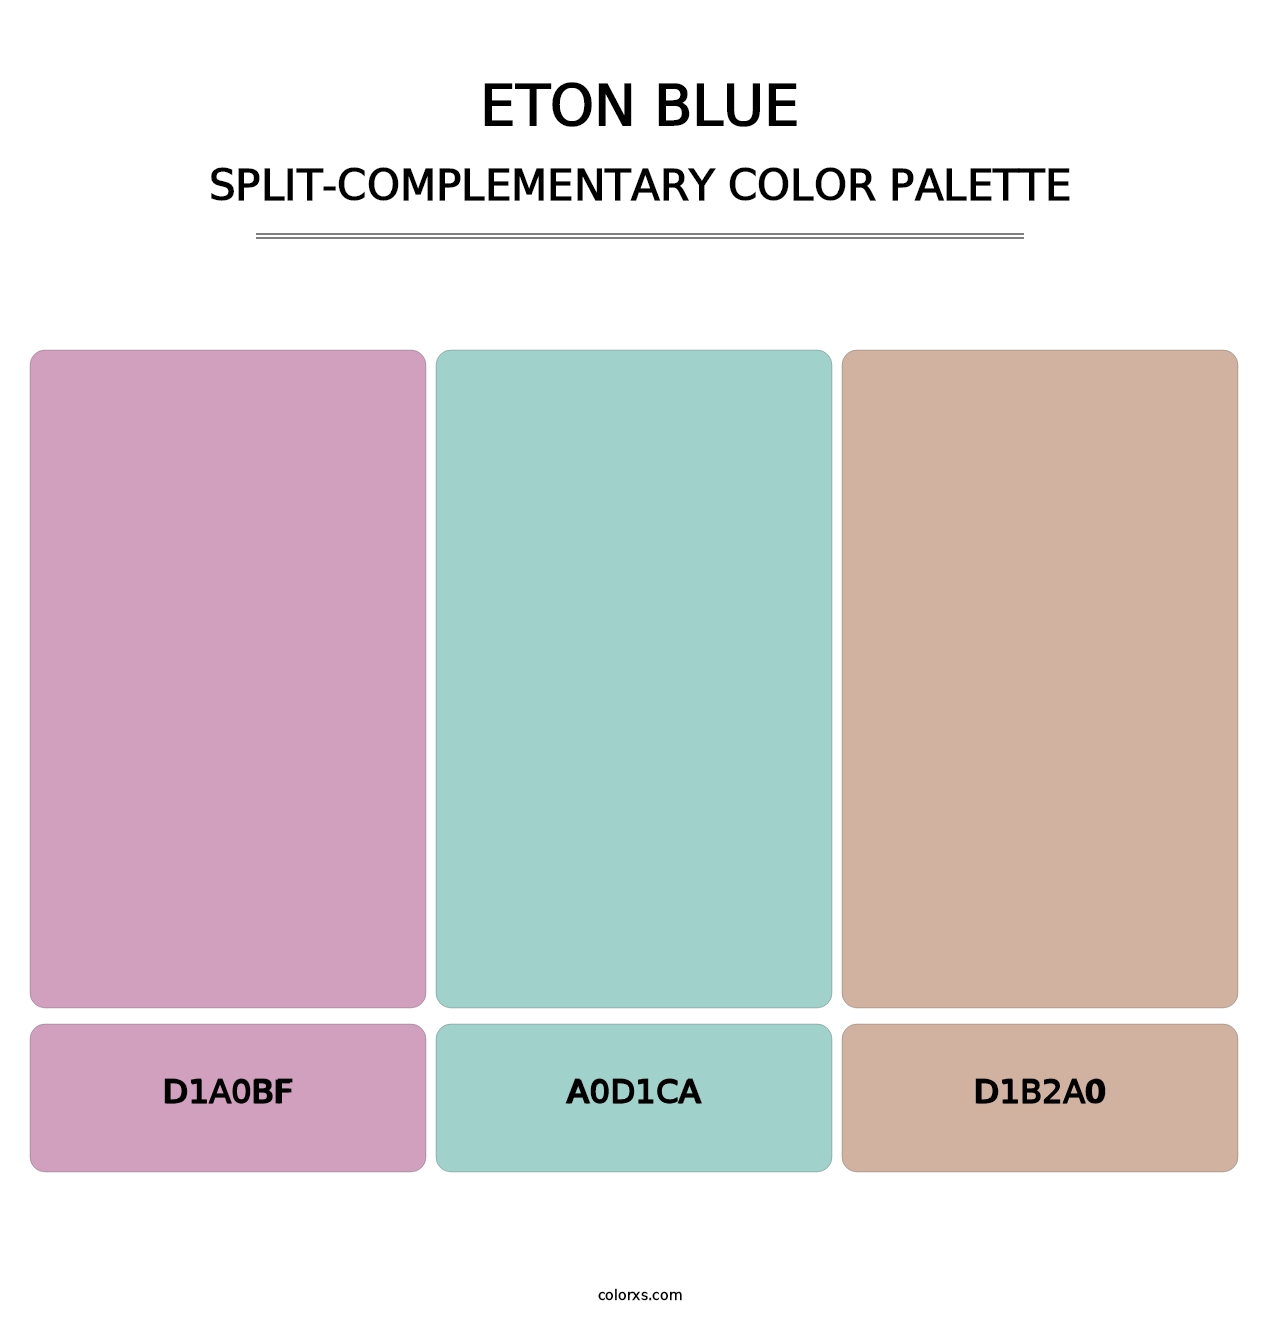 Eton blue - Split-Complementary Color Palette